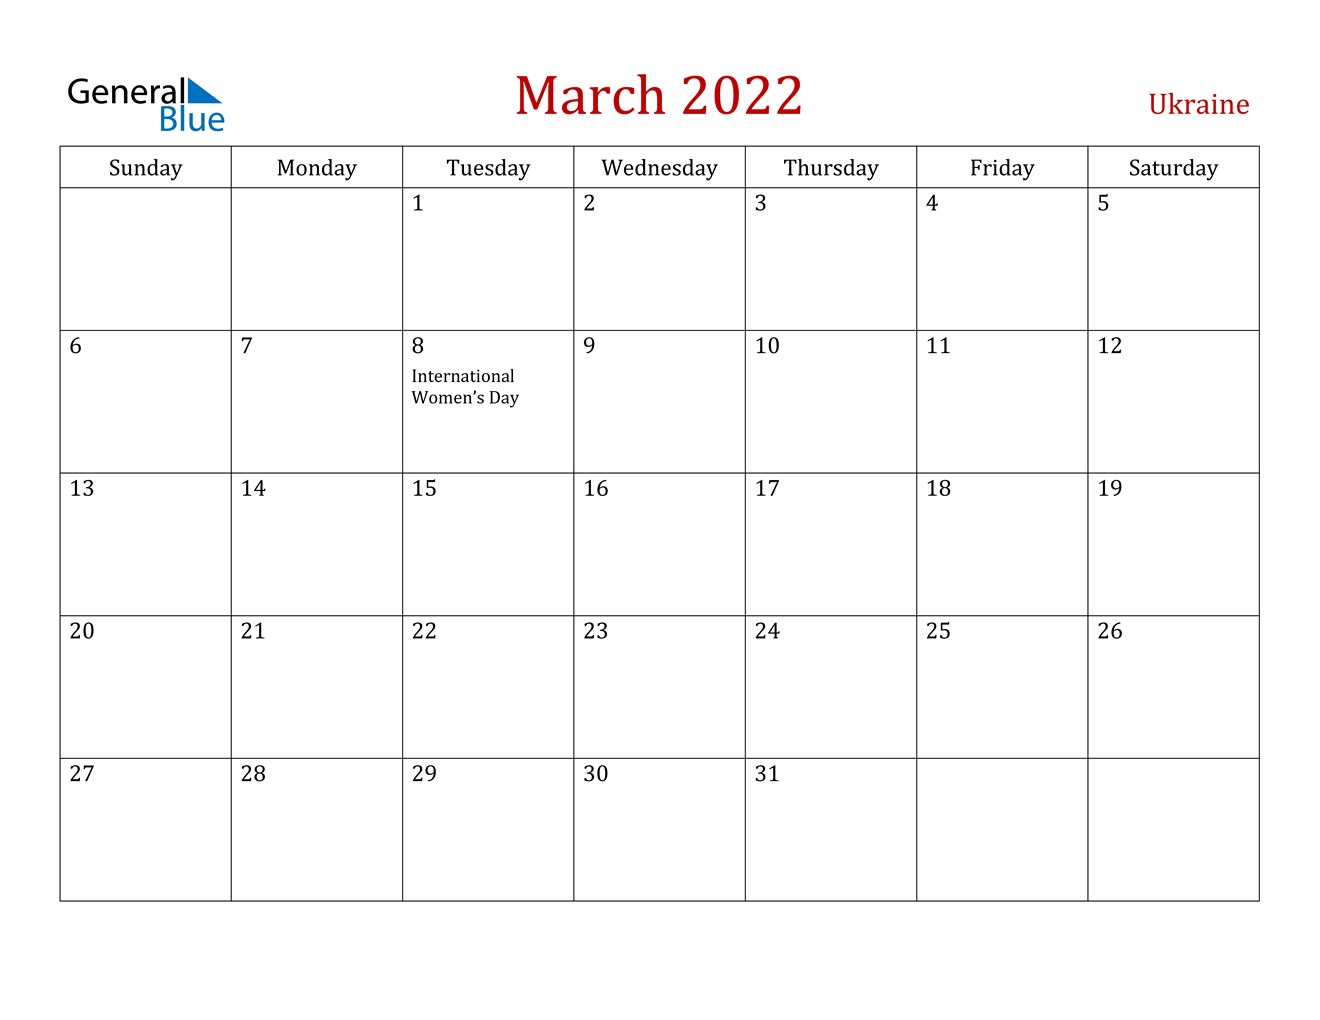 March 2022 Calendar - Ukraine